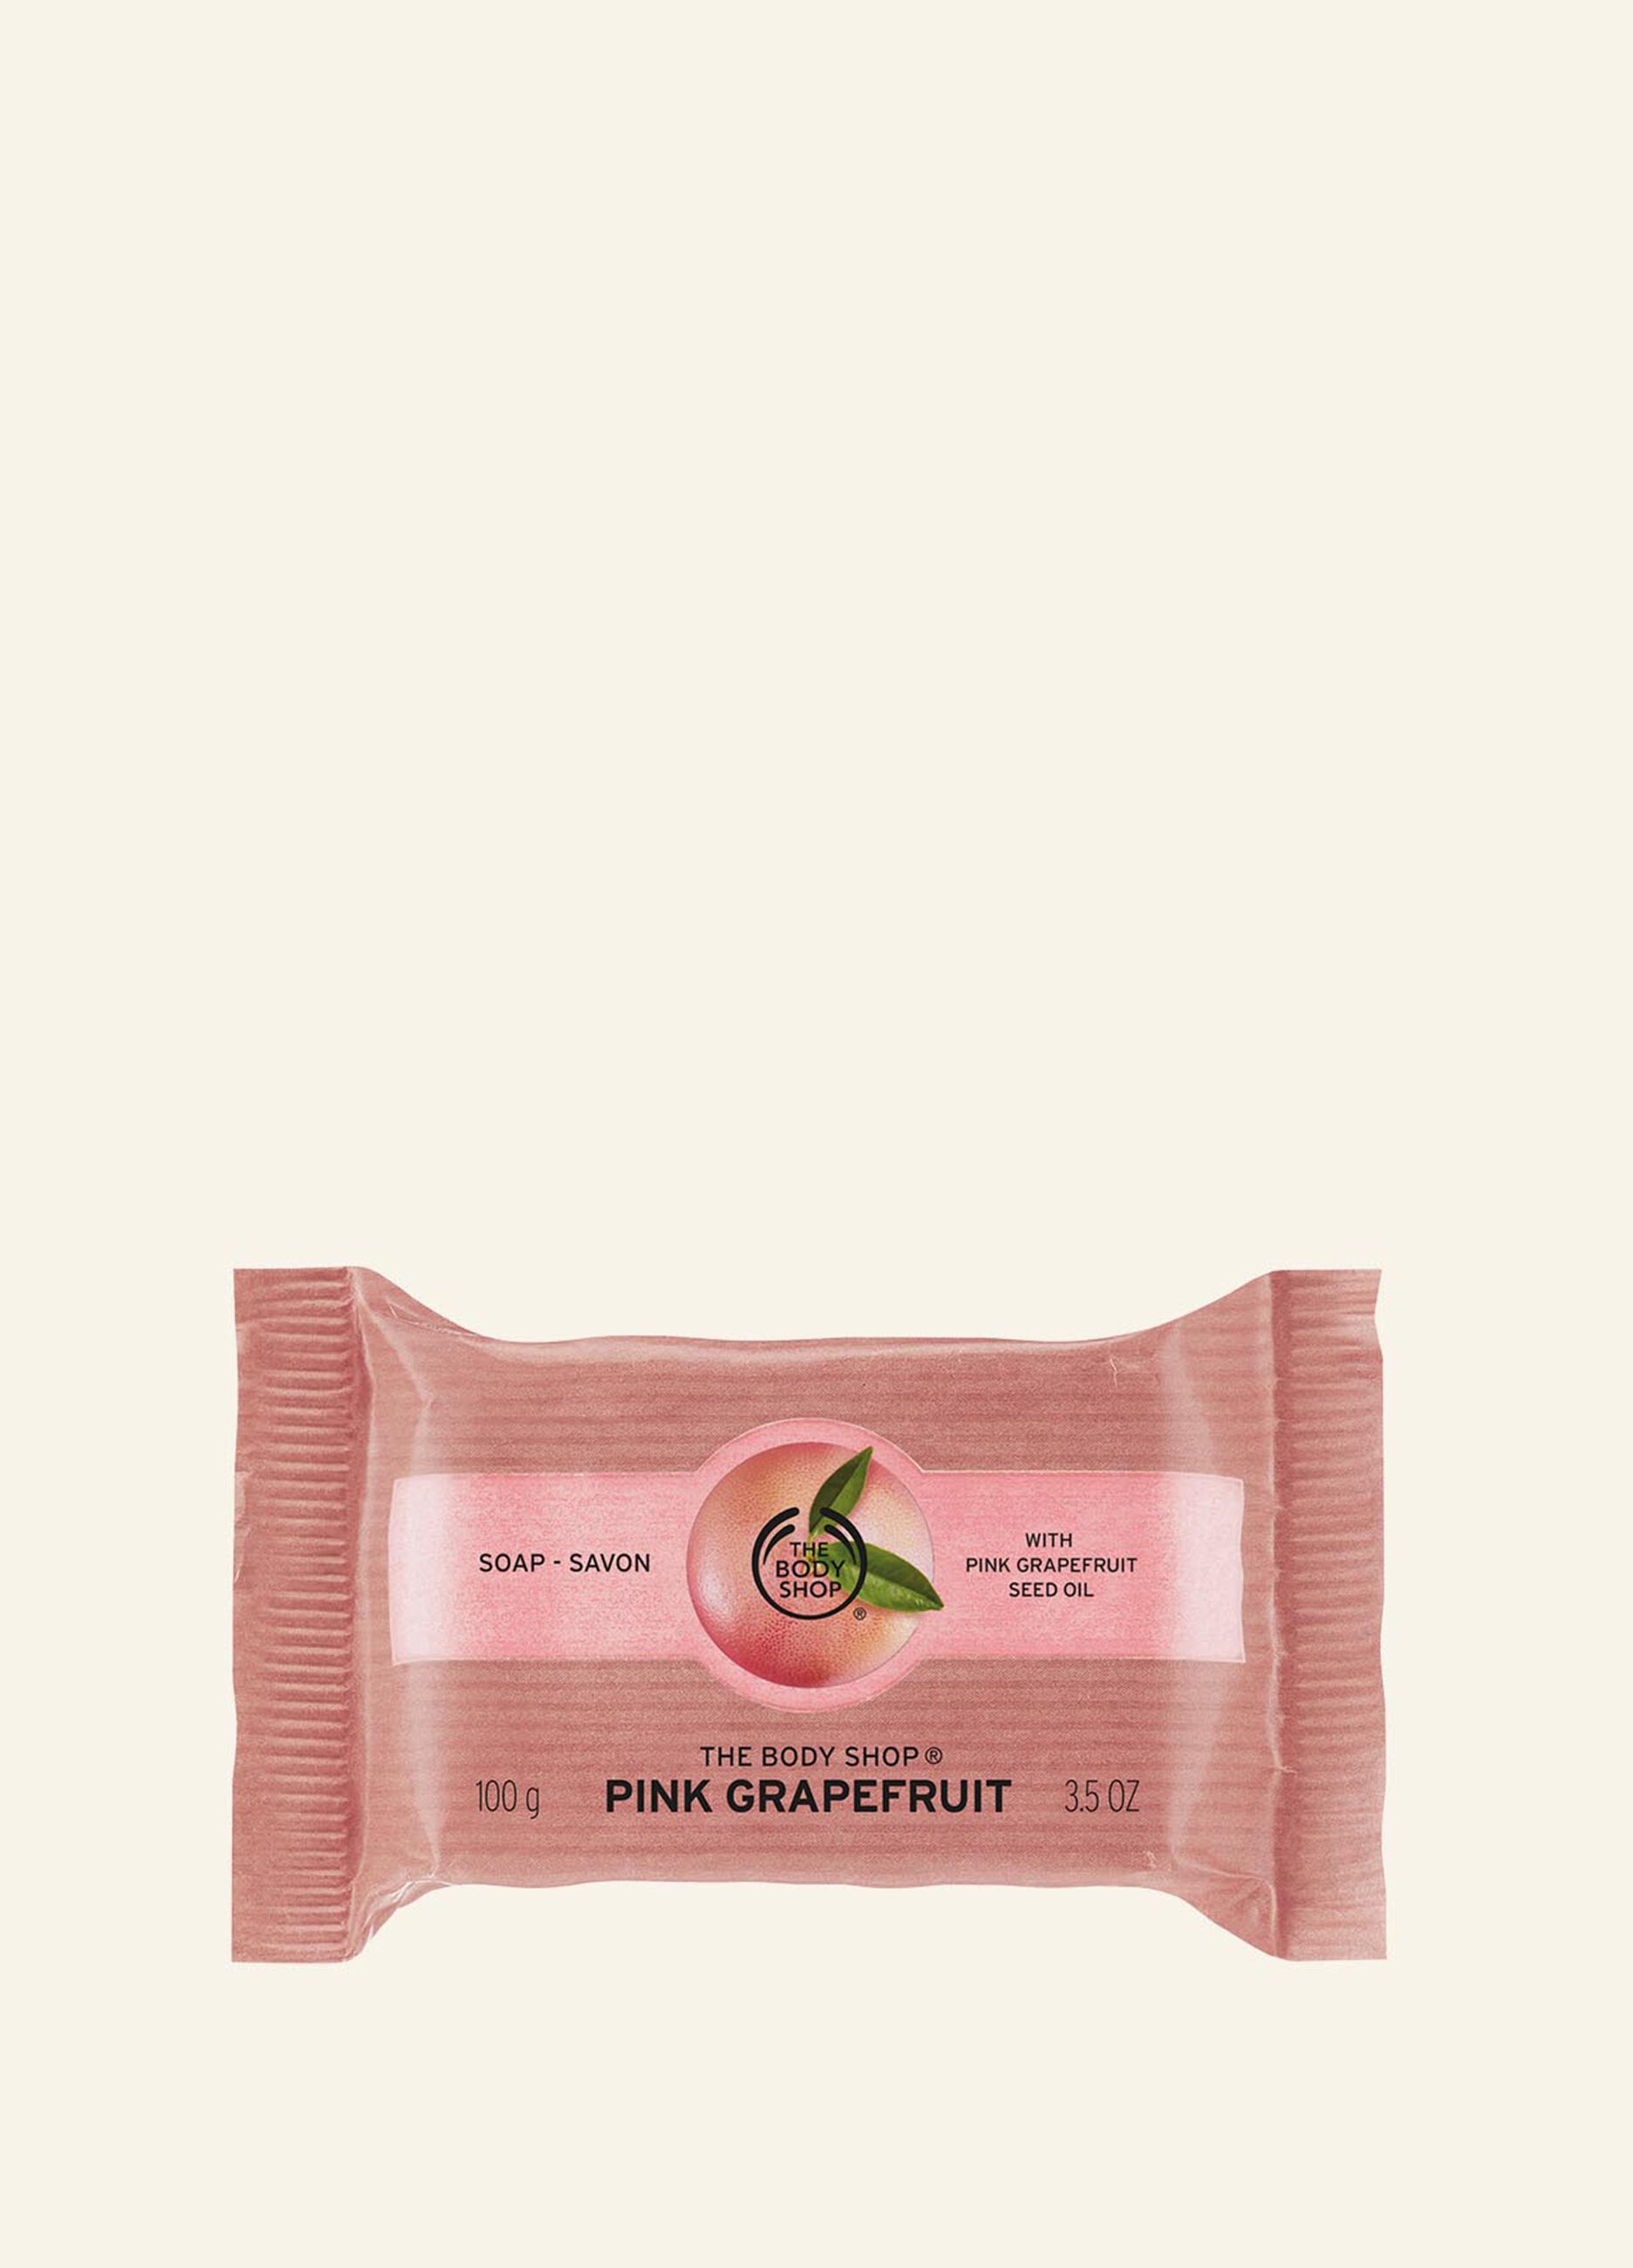 The Body Shop pink grapefruit soap